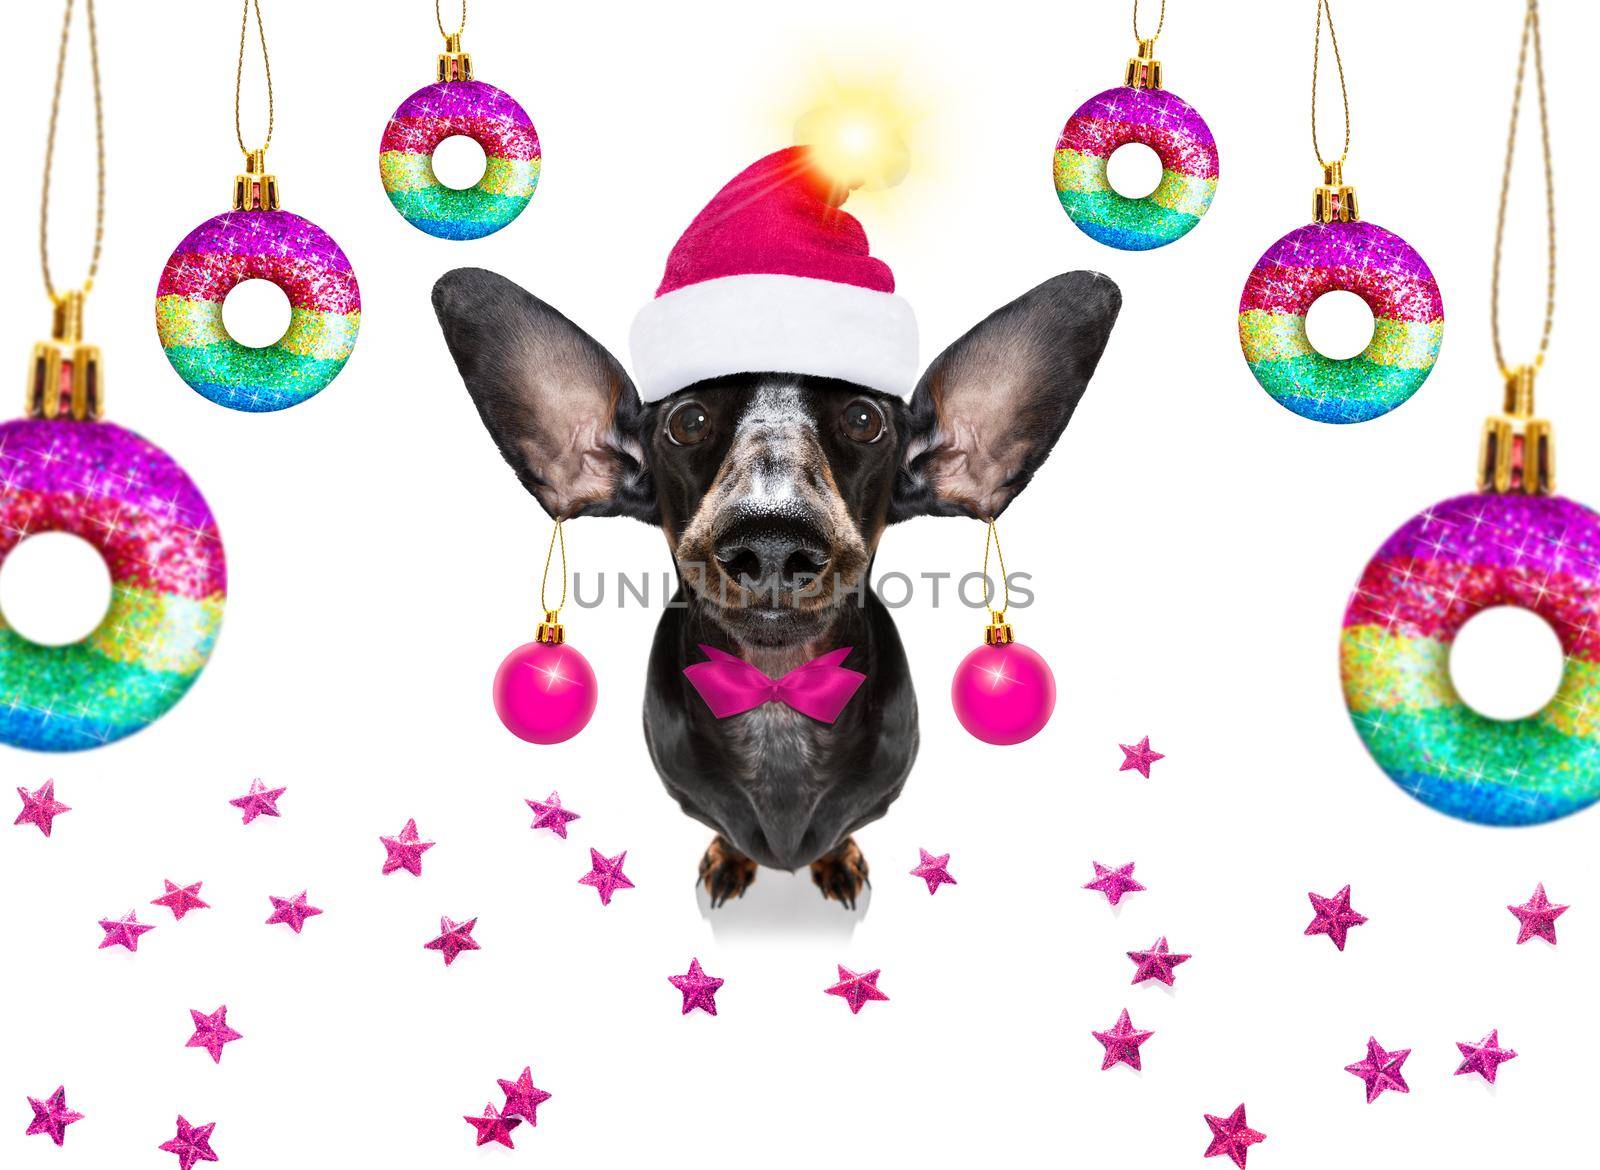 gay lgbt dachshund dog  as santa claus  for christmas holidays  balls baubles hanging